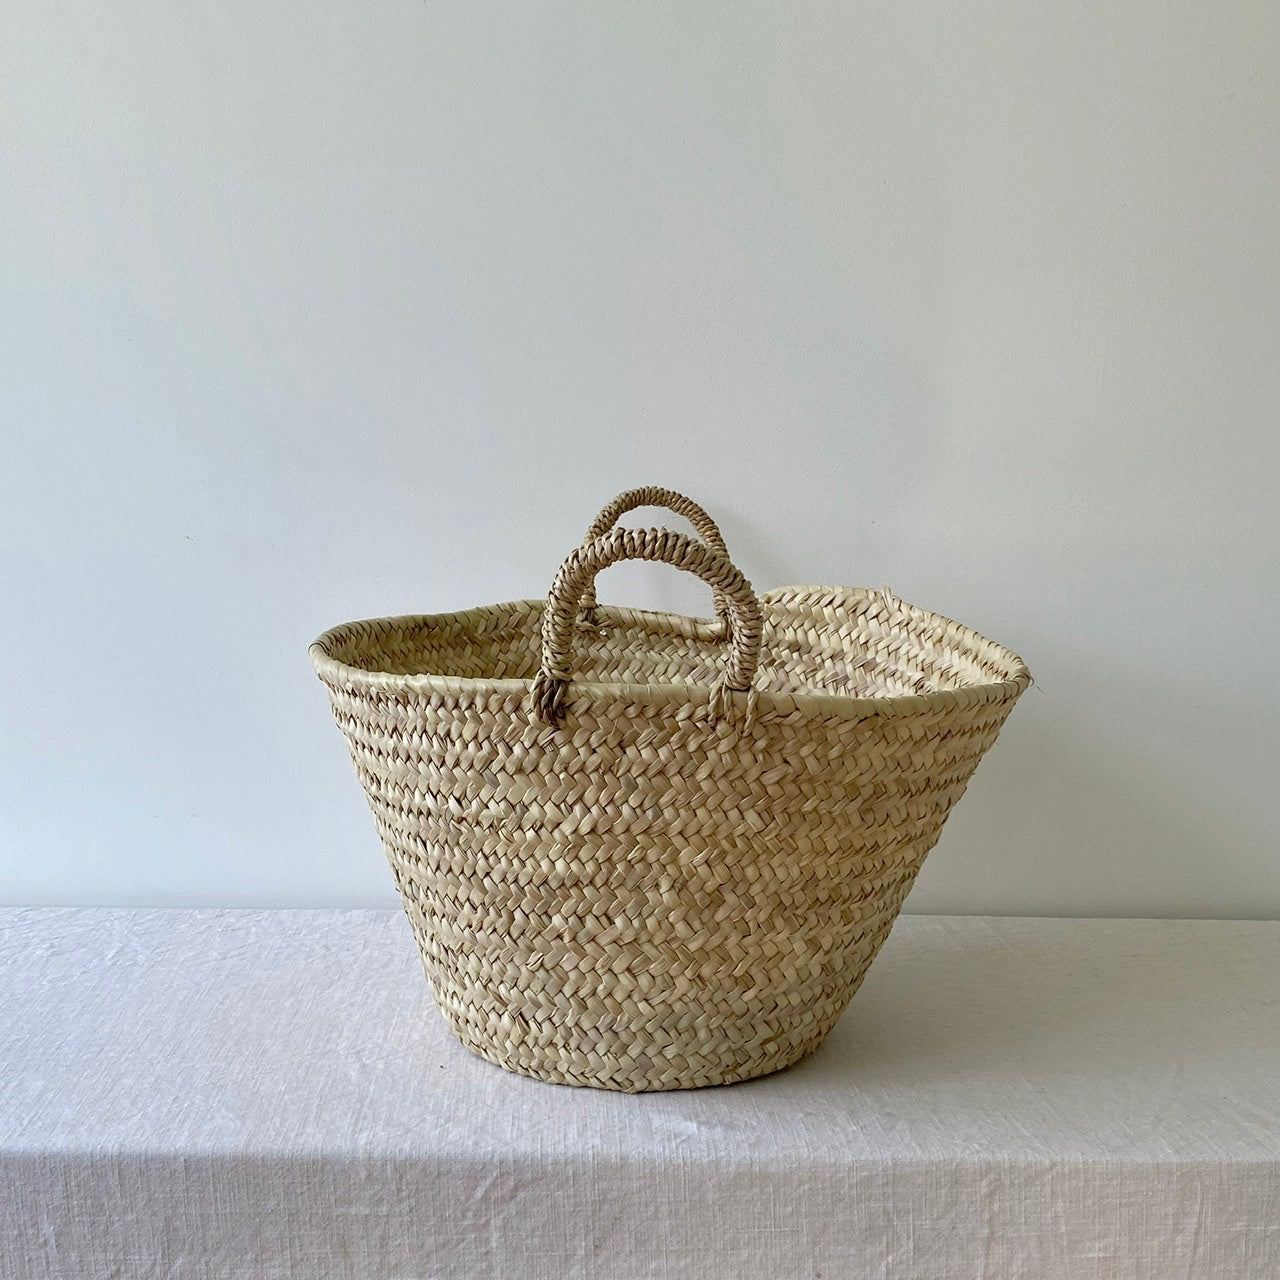 Rustic Market Basket - Medium